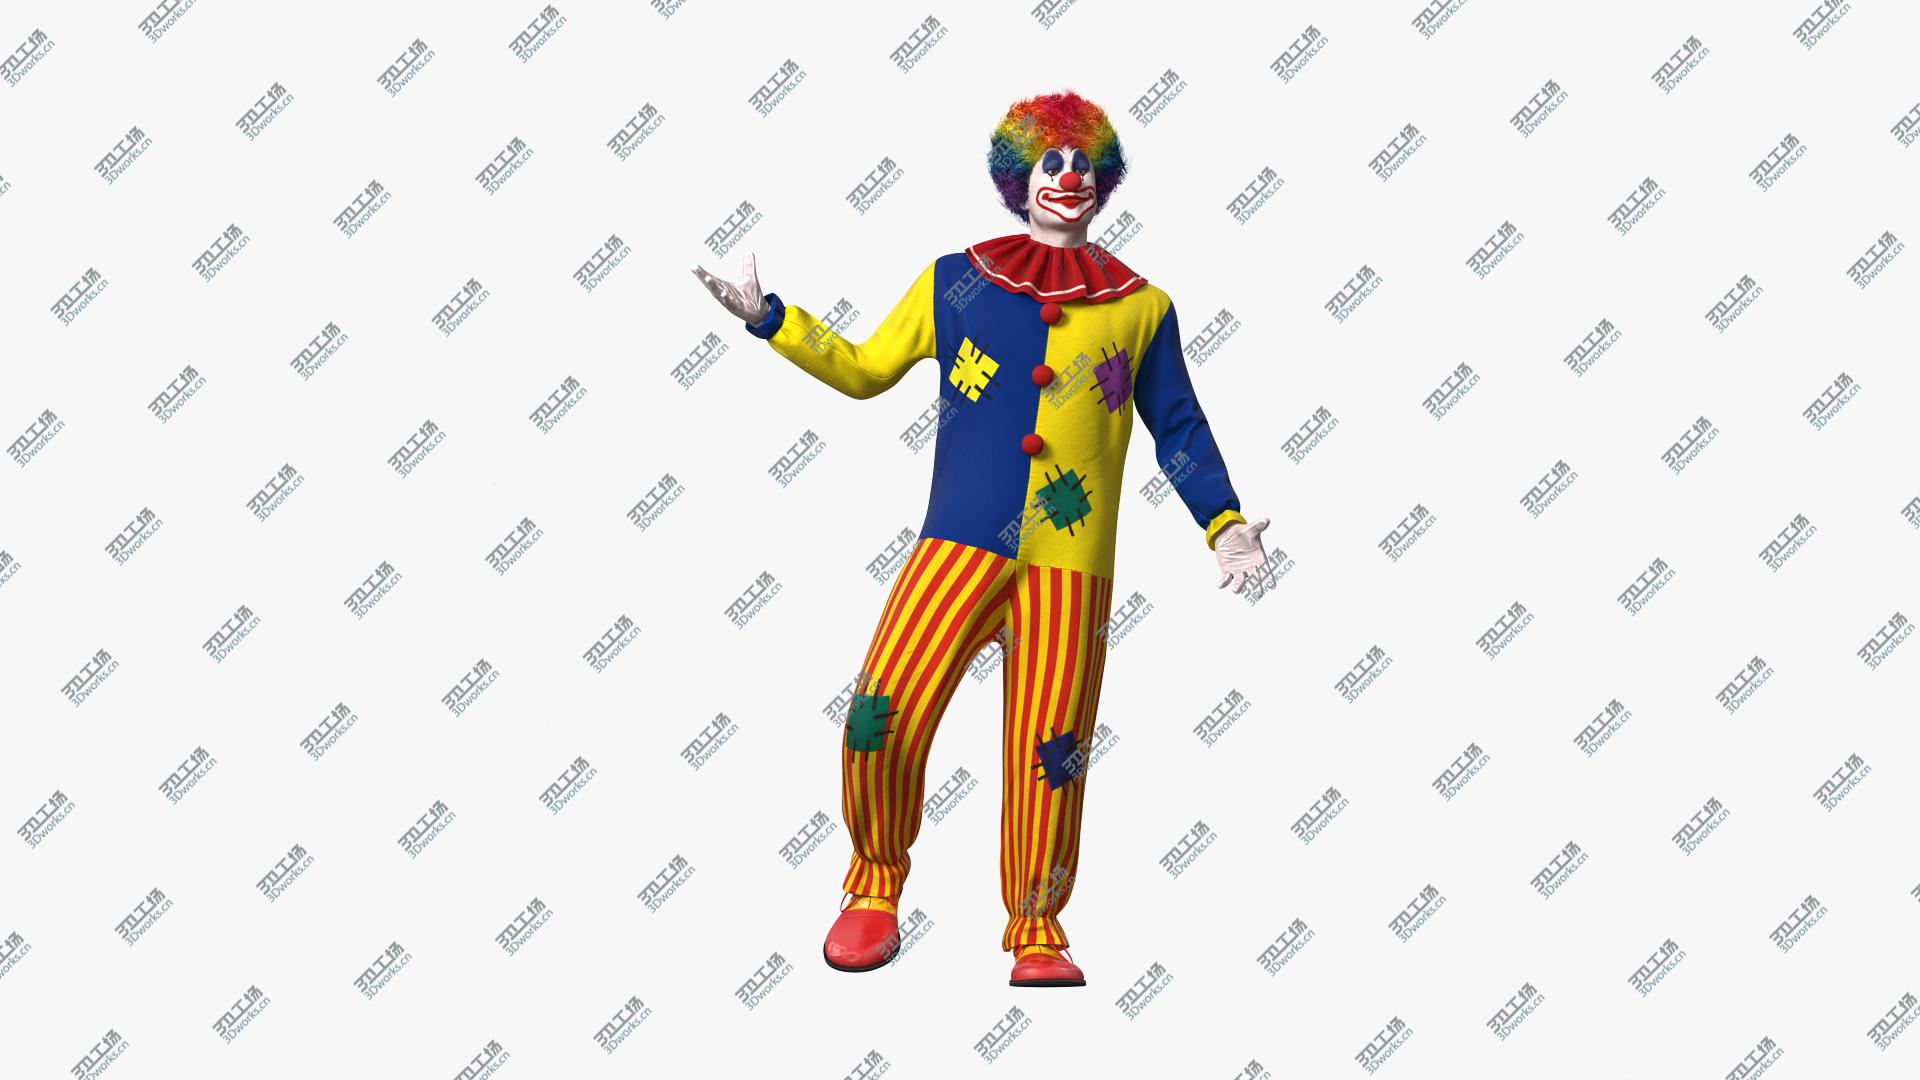 images/goods_img/202104093/Adult Clown Suit Standing Pose Fur 3D model/2.jpg